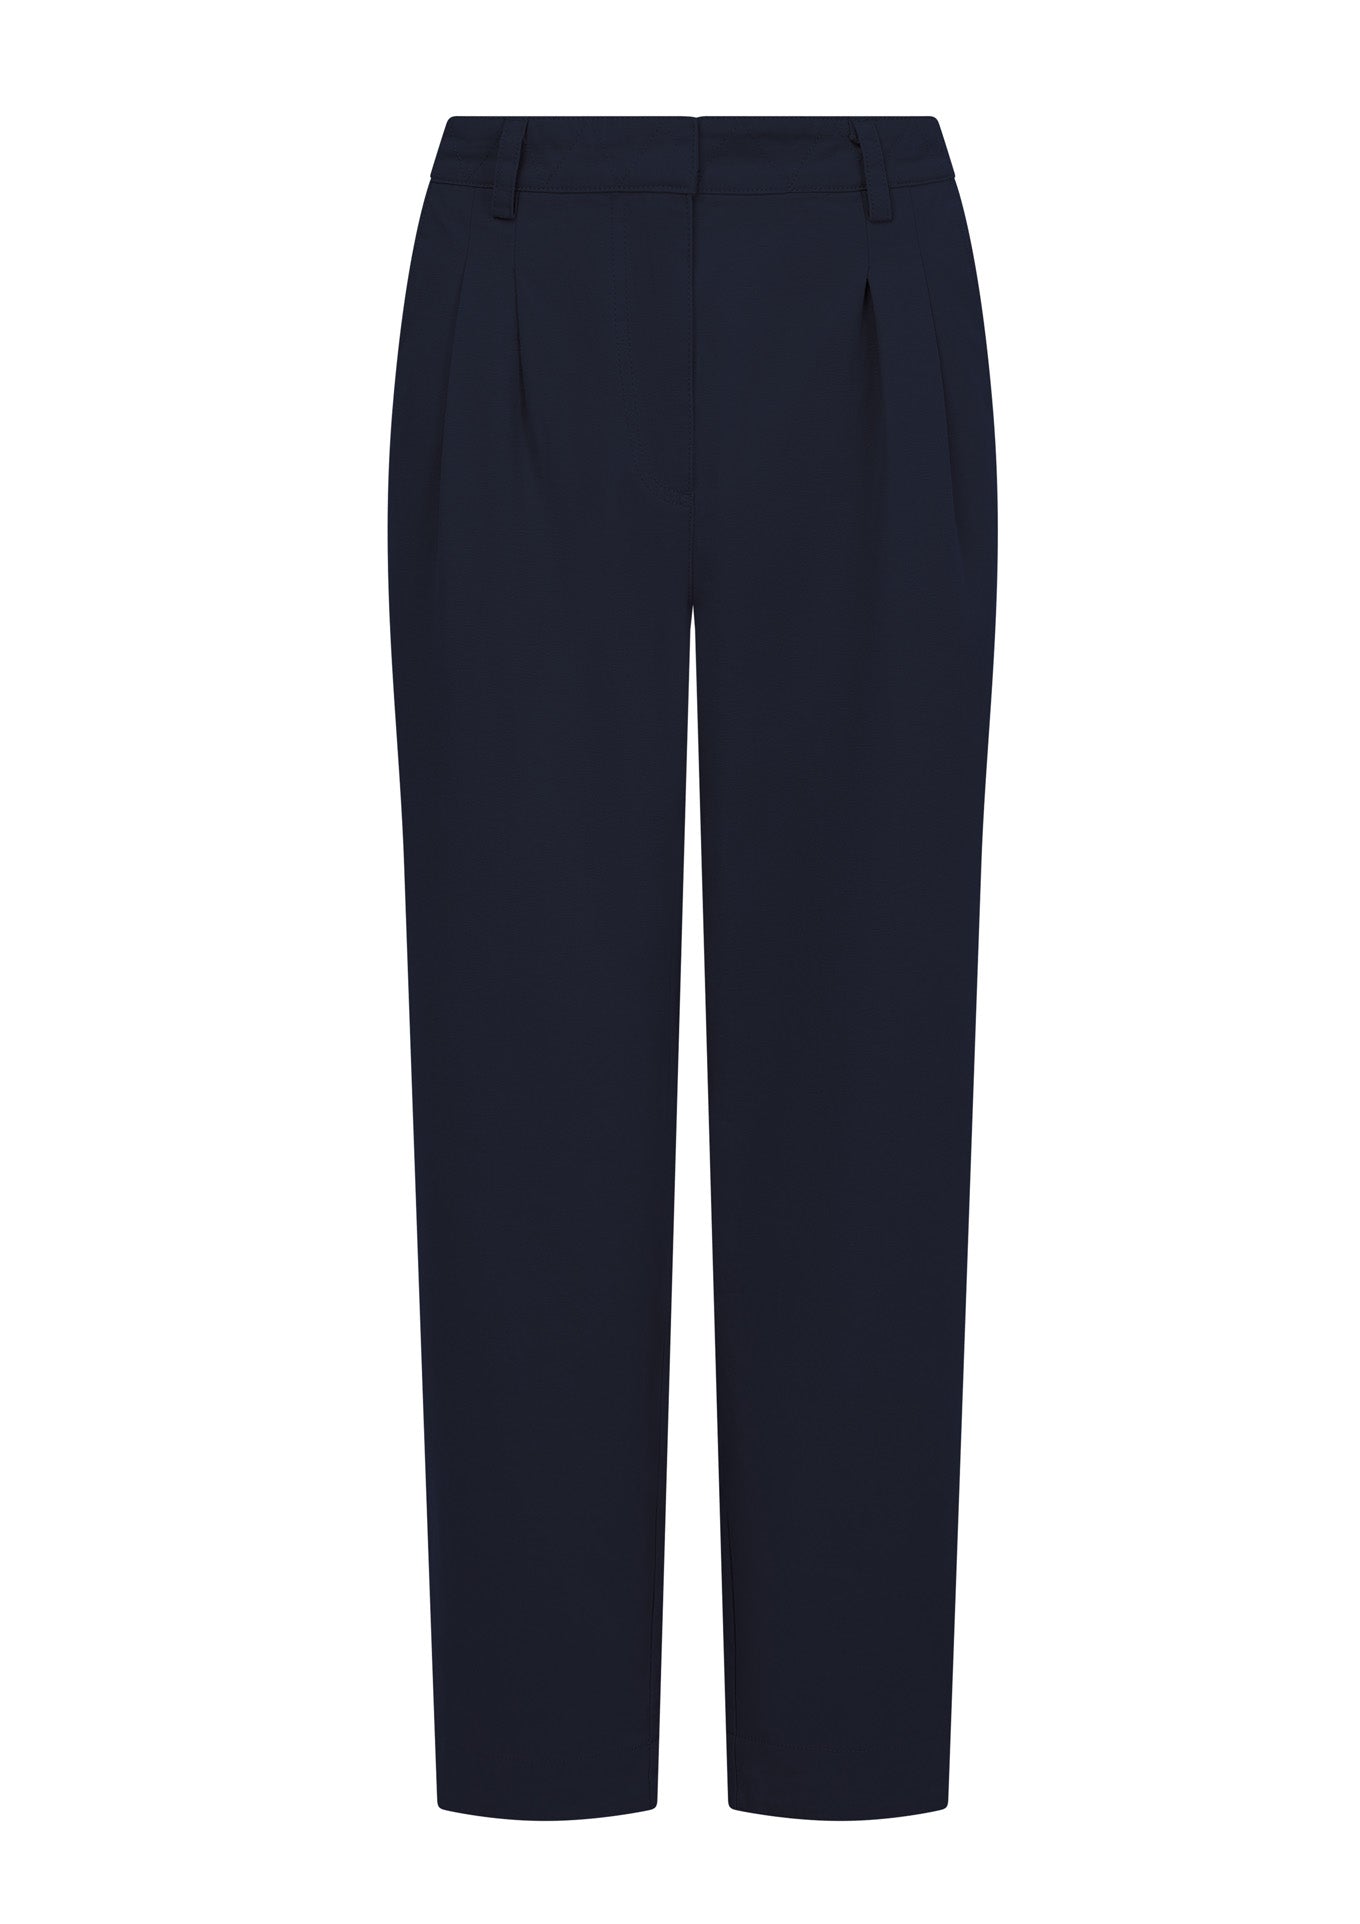 OLIA Organic Cotton Trousers - Dark Navy, SIZE 5 / UK 16 / EUR 44